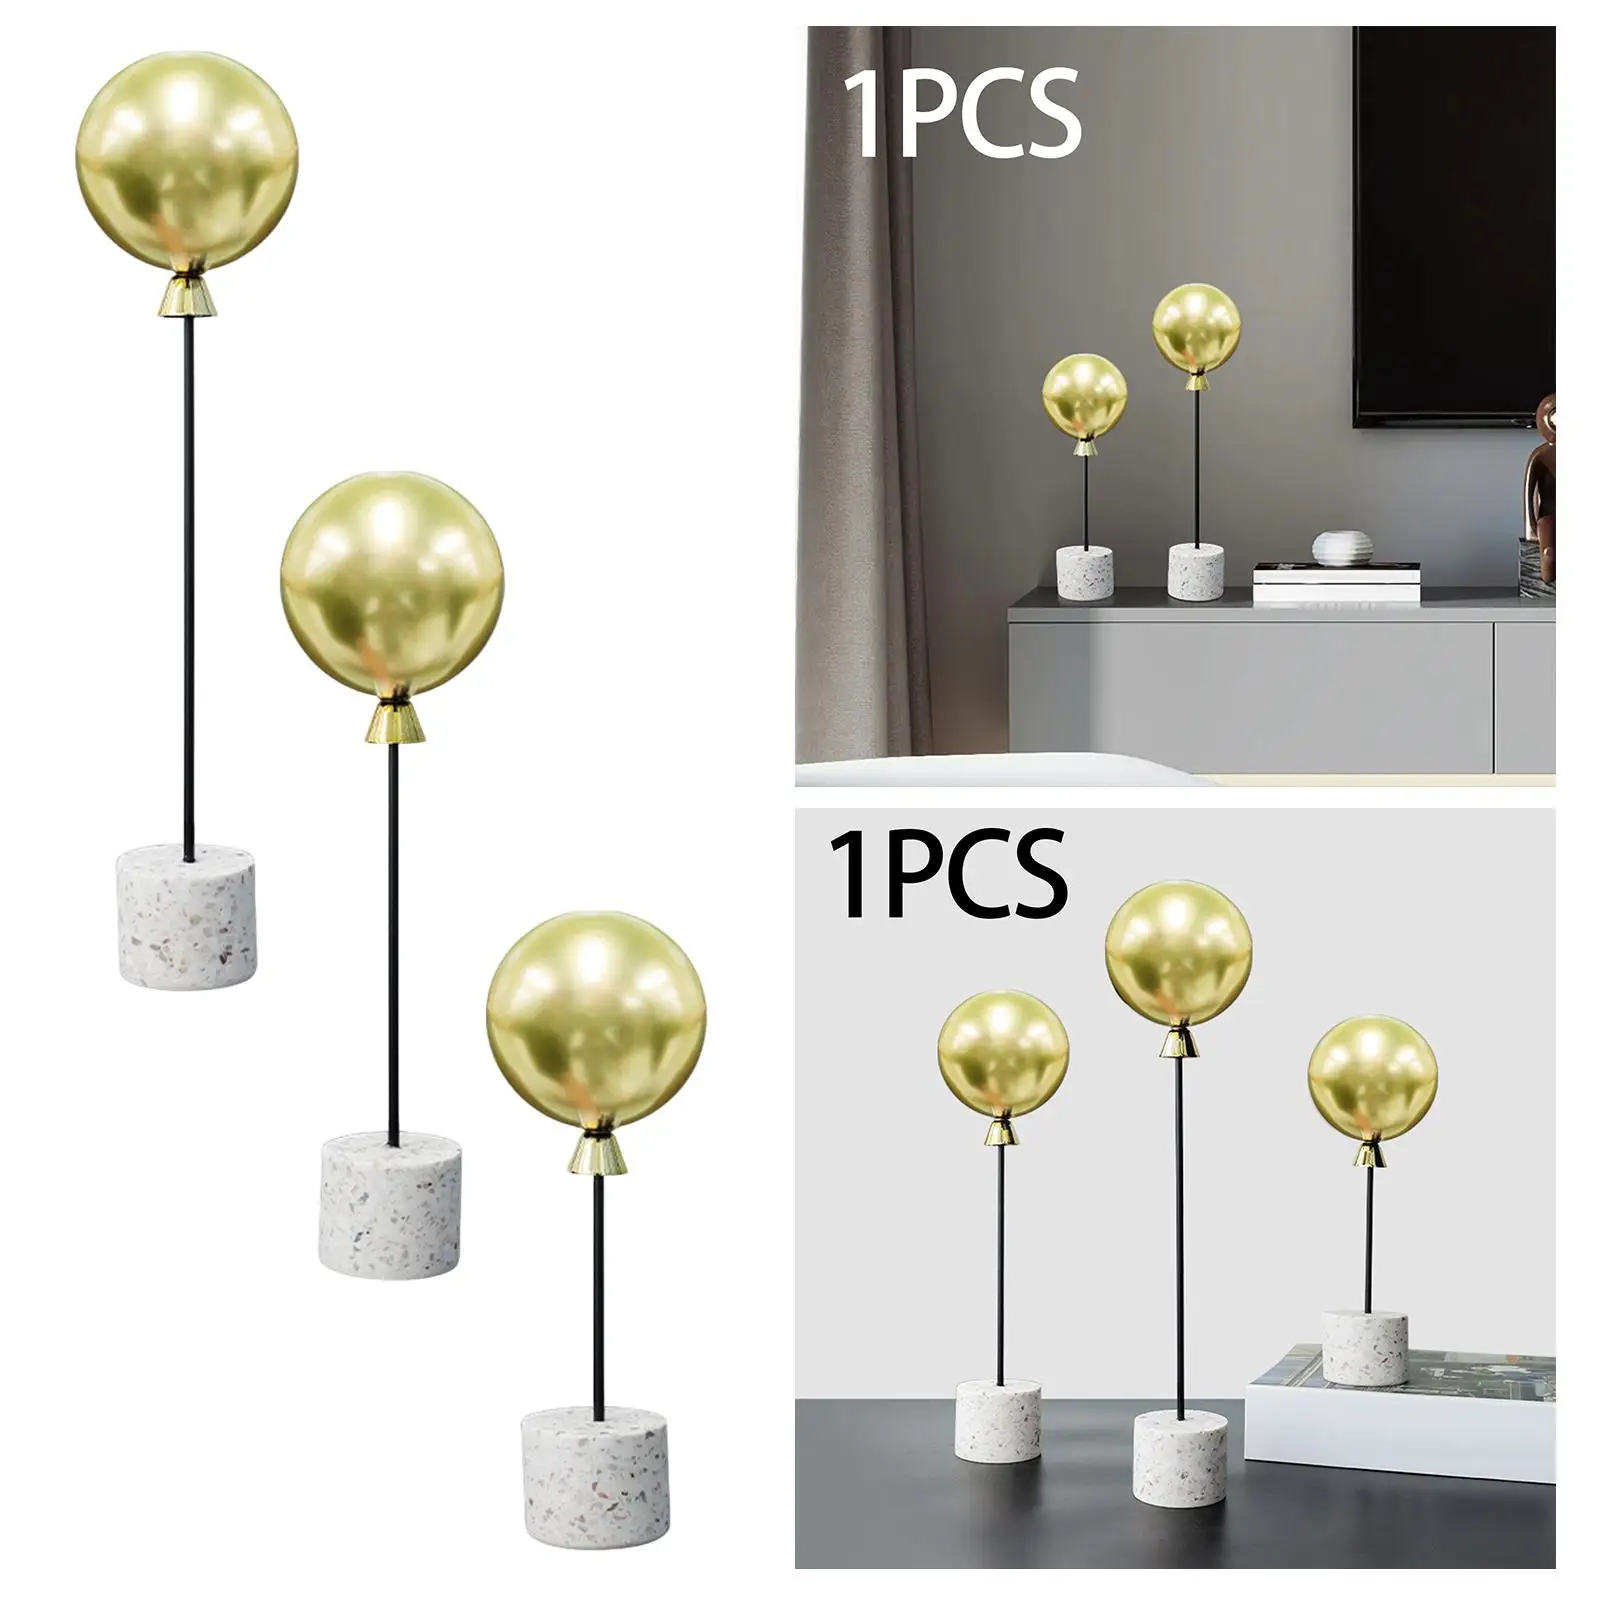 Metal Balloon Decorations Simple Balloon Model for Cabinet Bedroom Bathroom